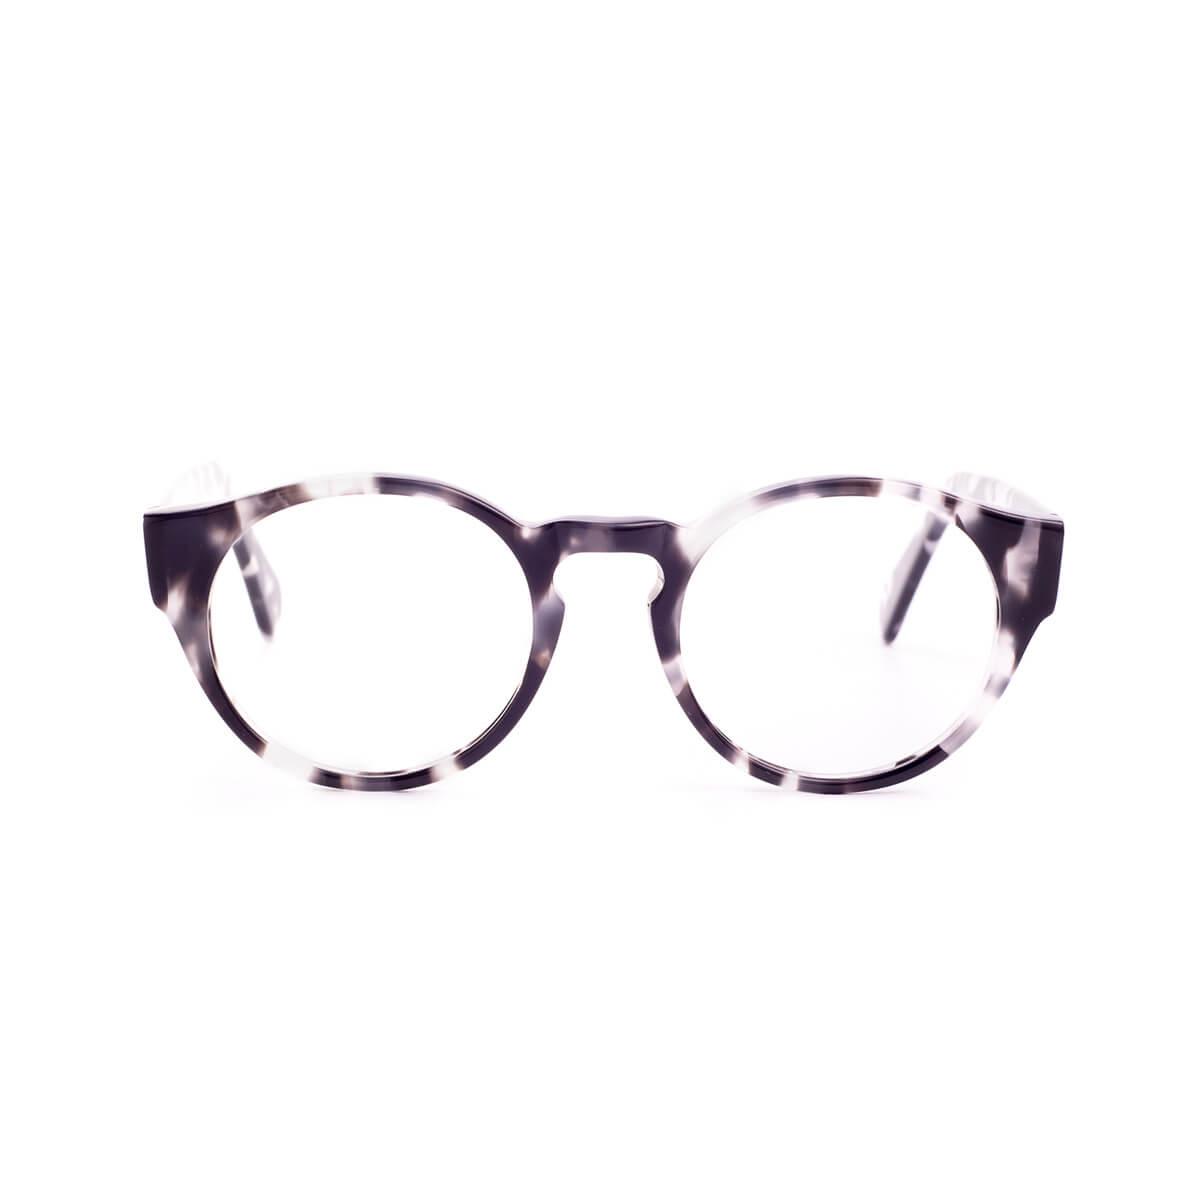 Monet - Vanglass Eyewear